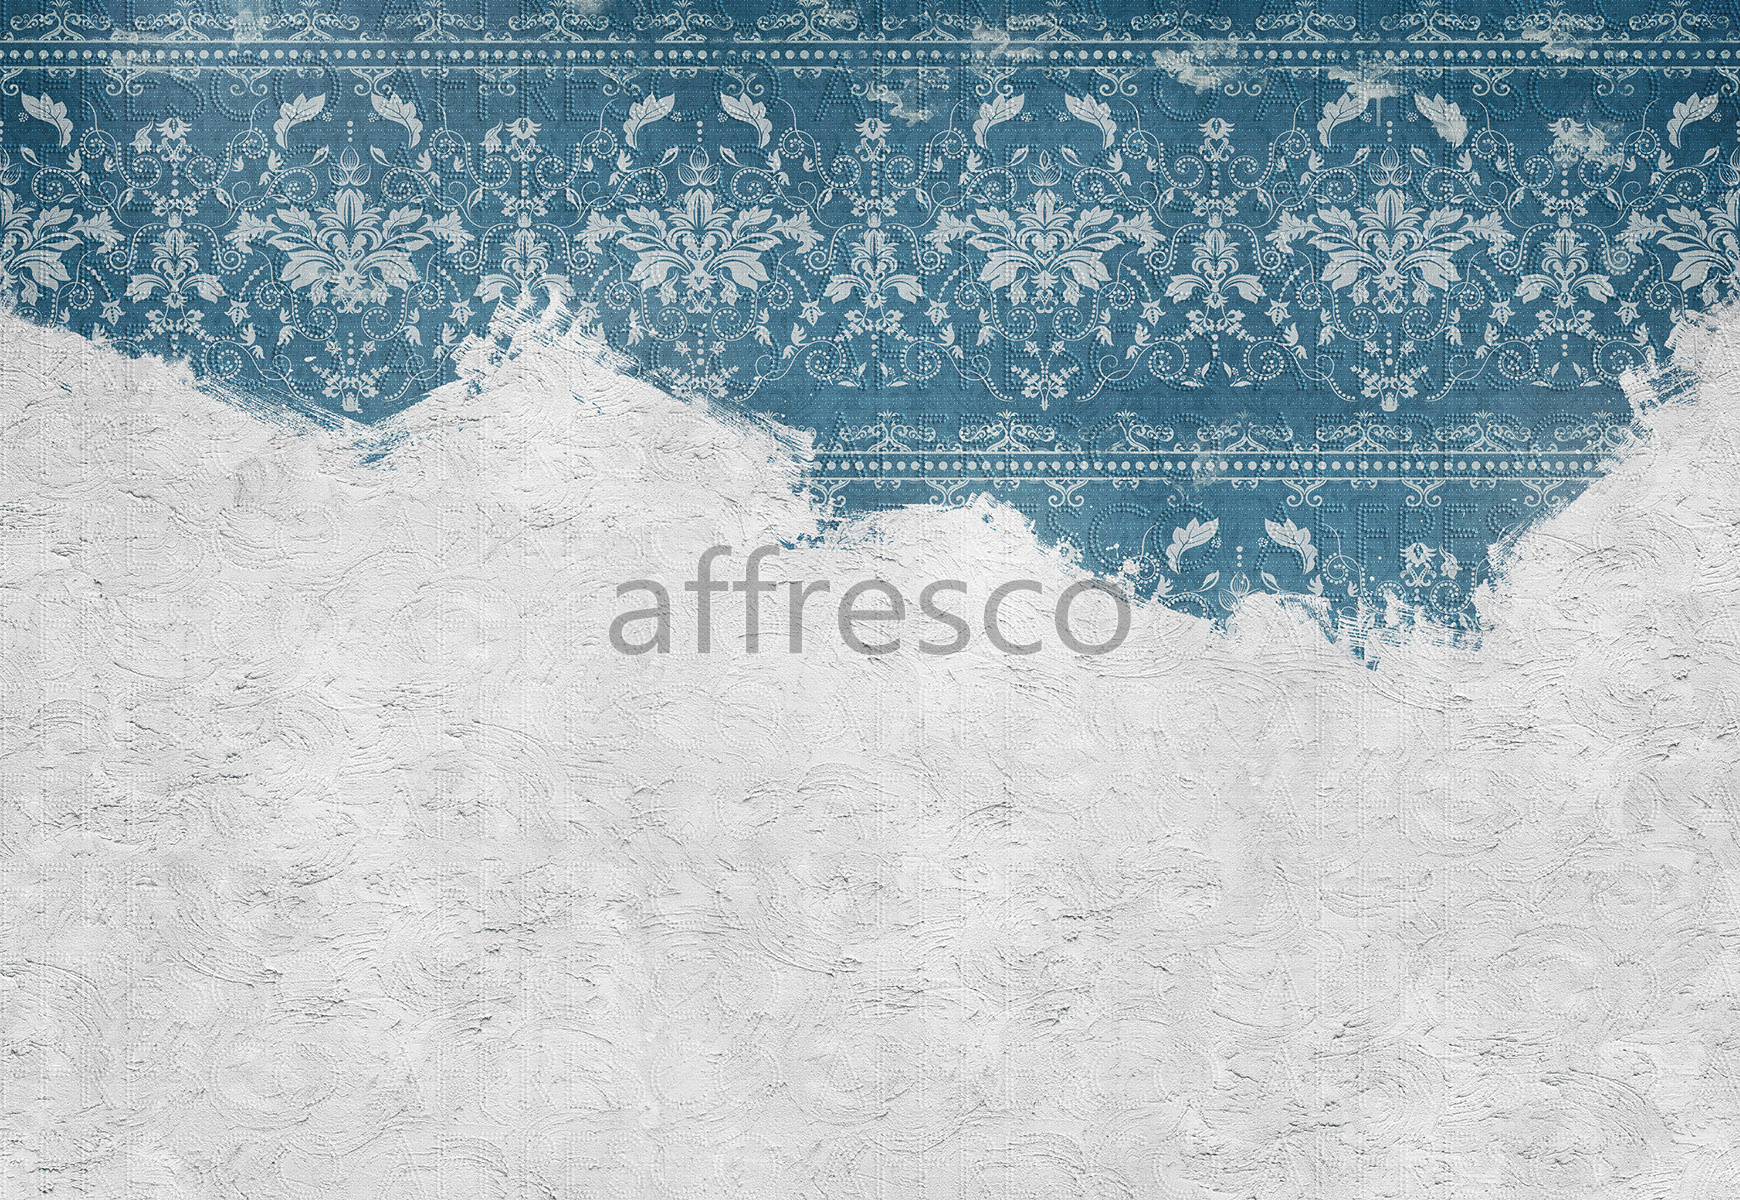 ID135766 | Textures | Старый орнамент | Affresco Factory